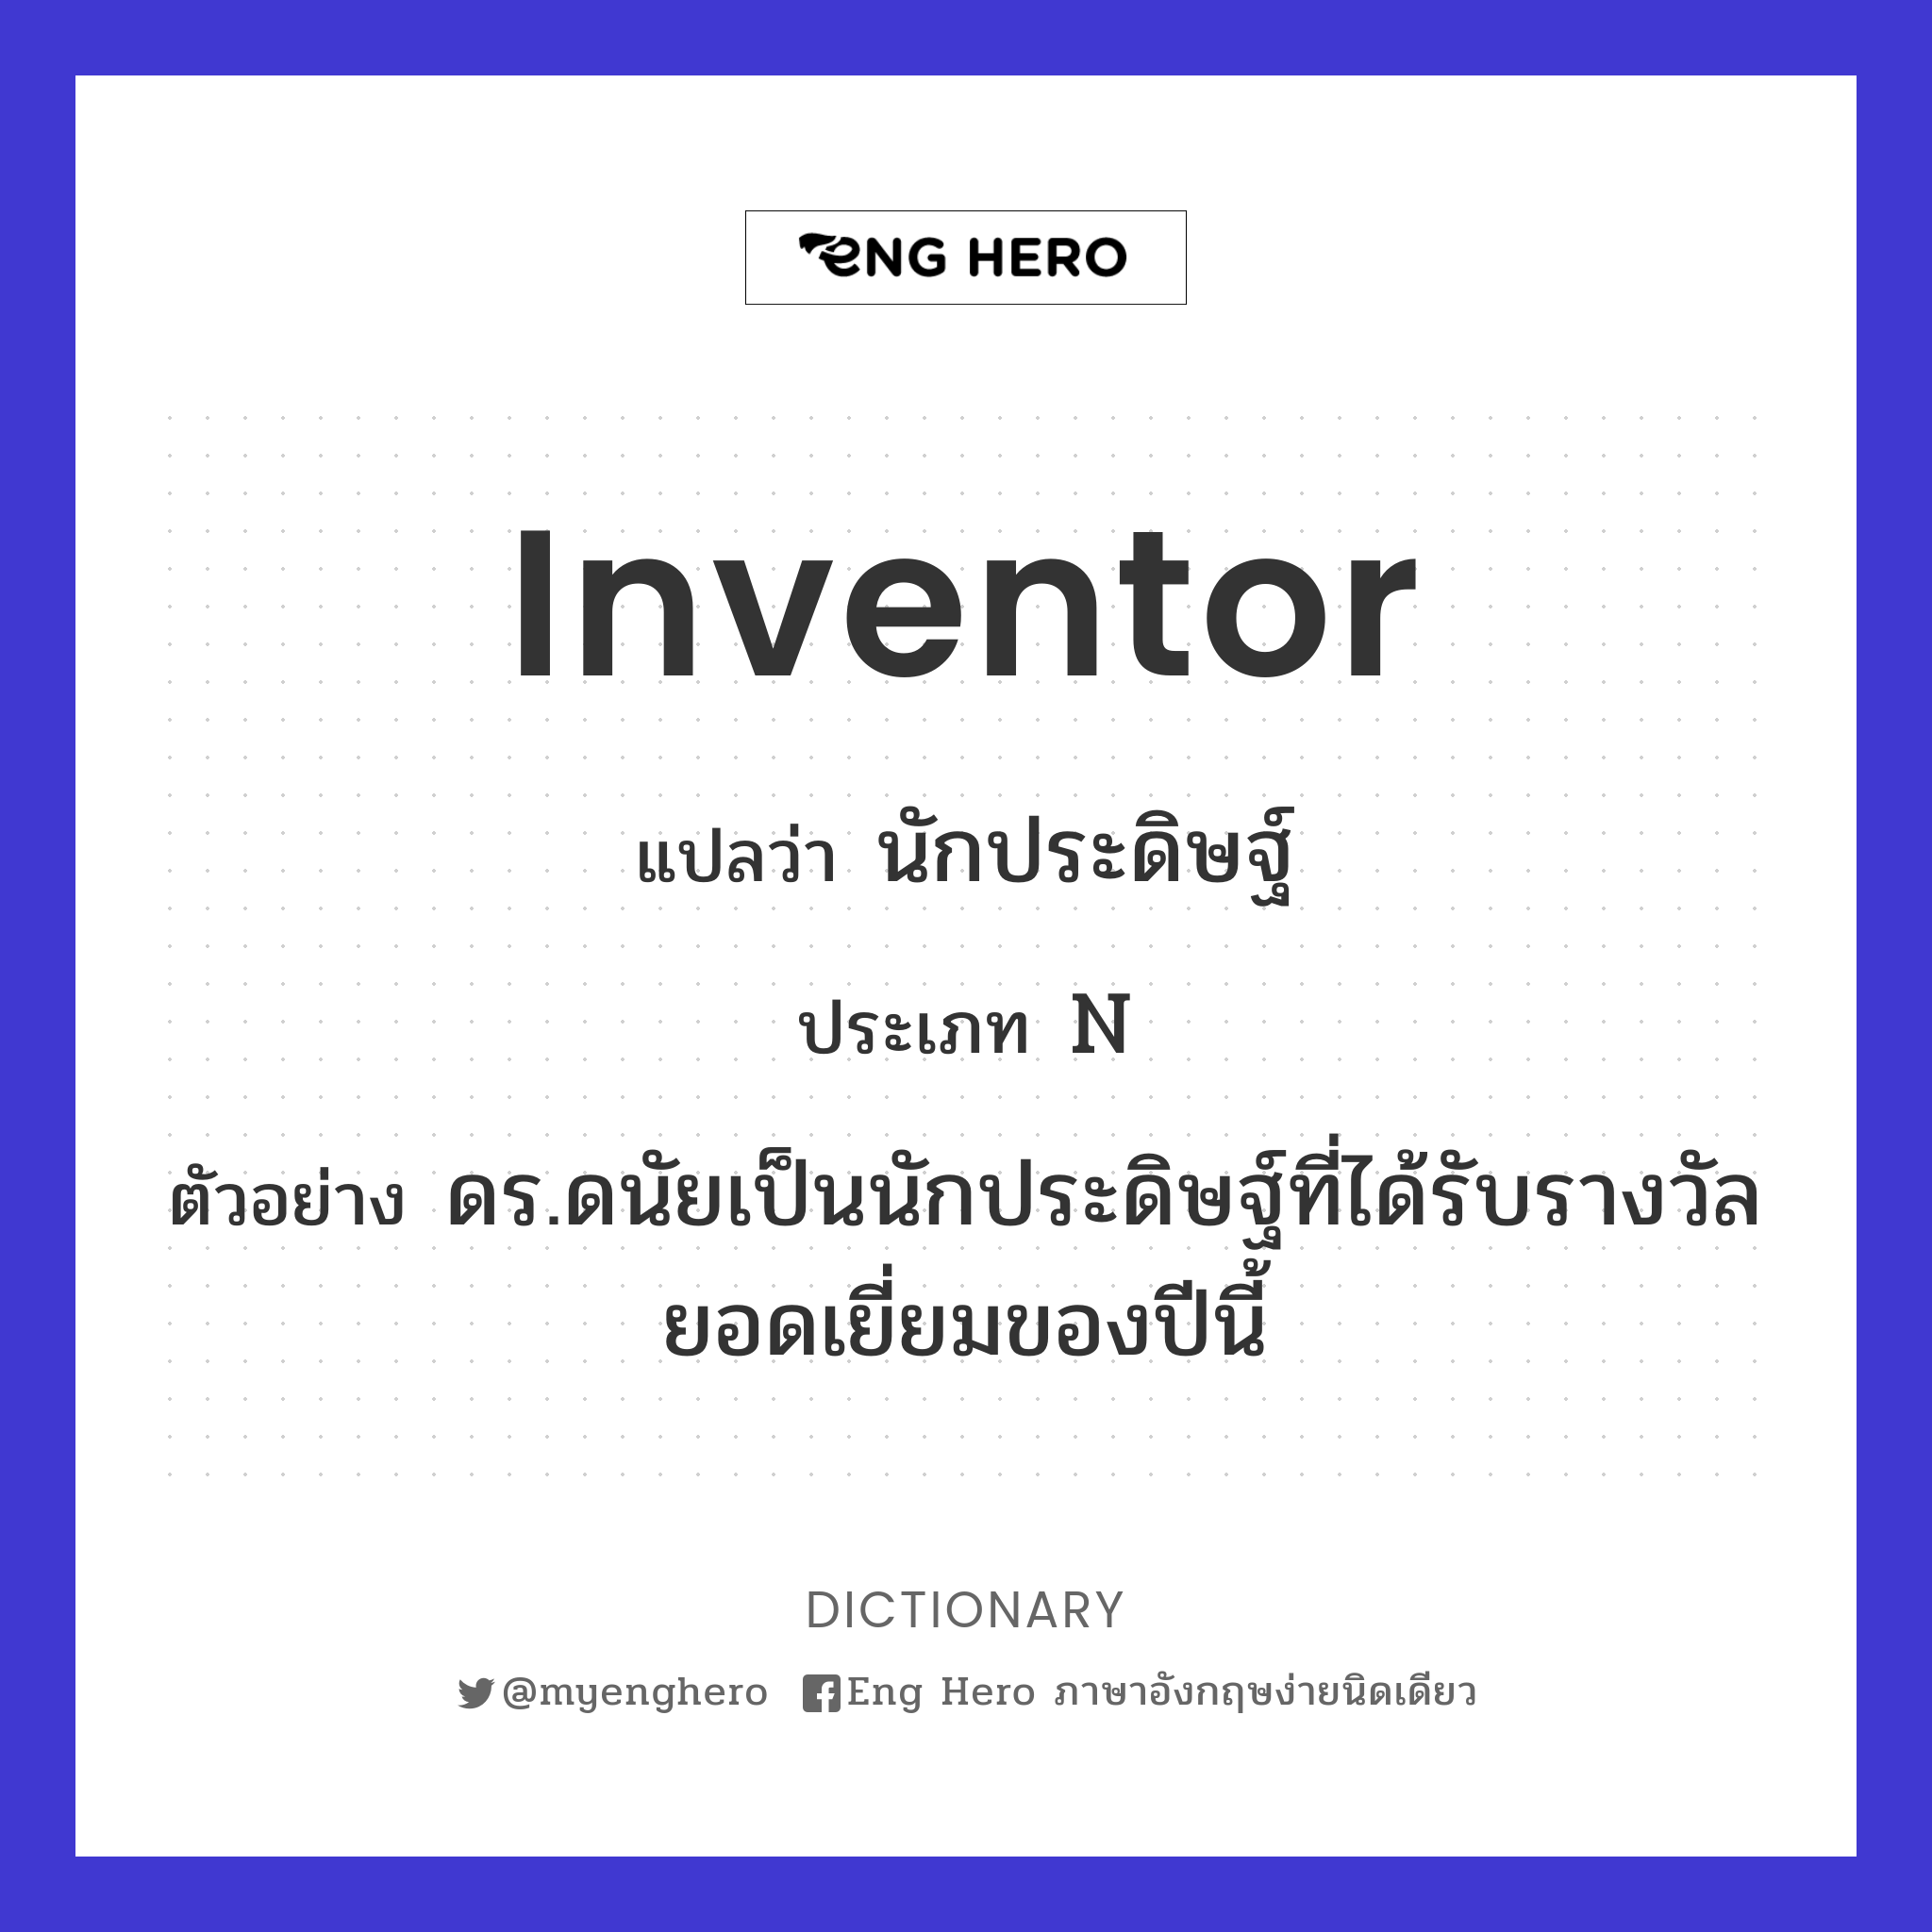 inventor